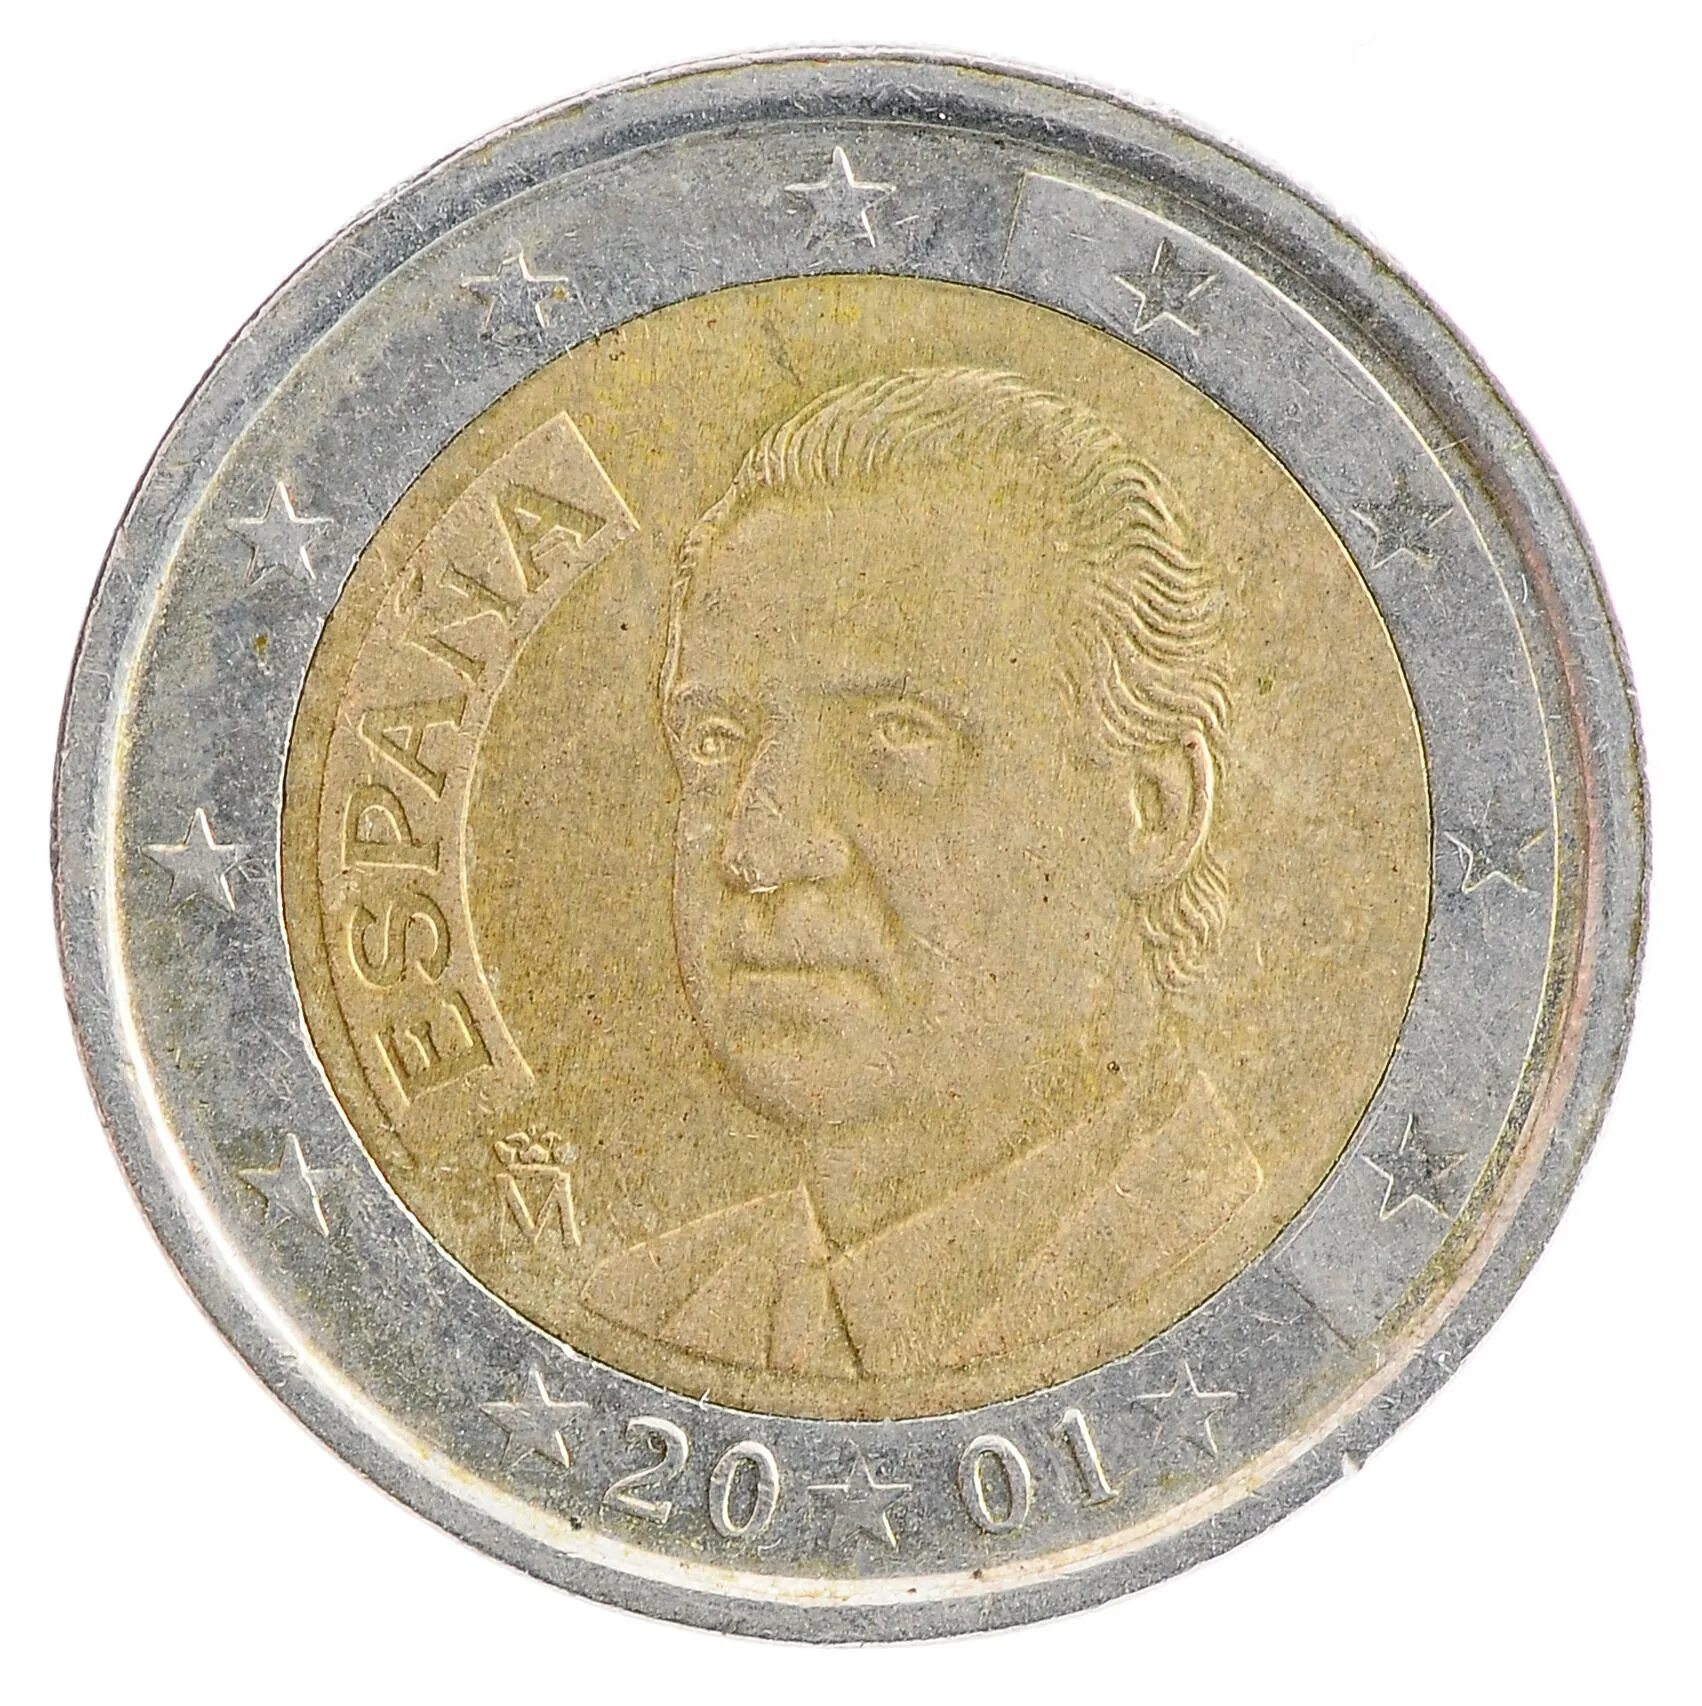 2 Евро Испания 2001. 2 Евро монета 2001. 1 Евро Espana 2001. 2 Euro 2001 Италия. Евро 2001 год